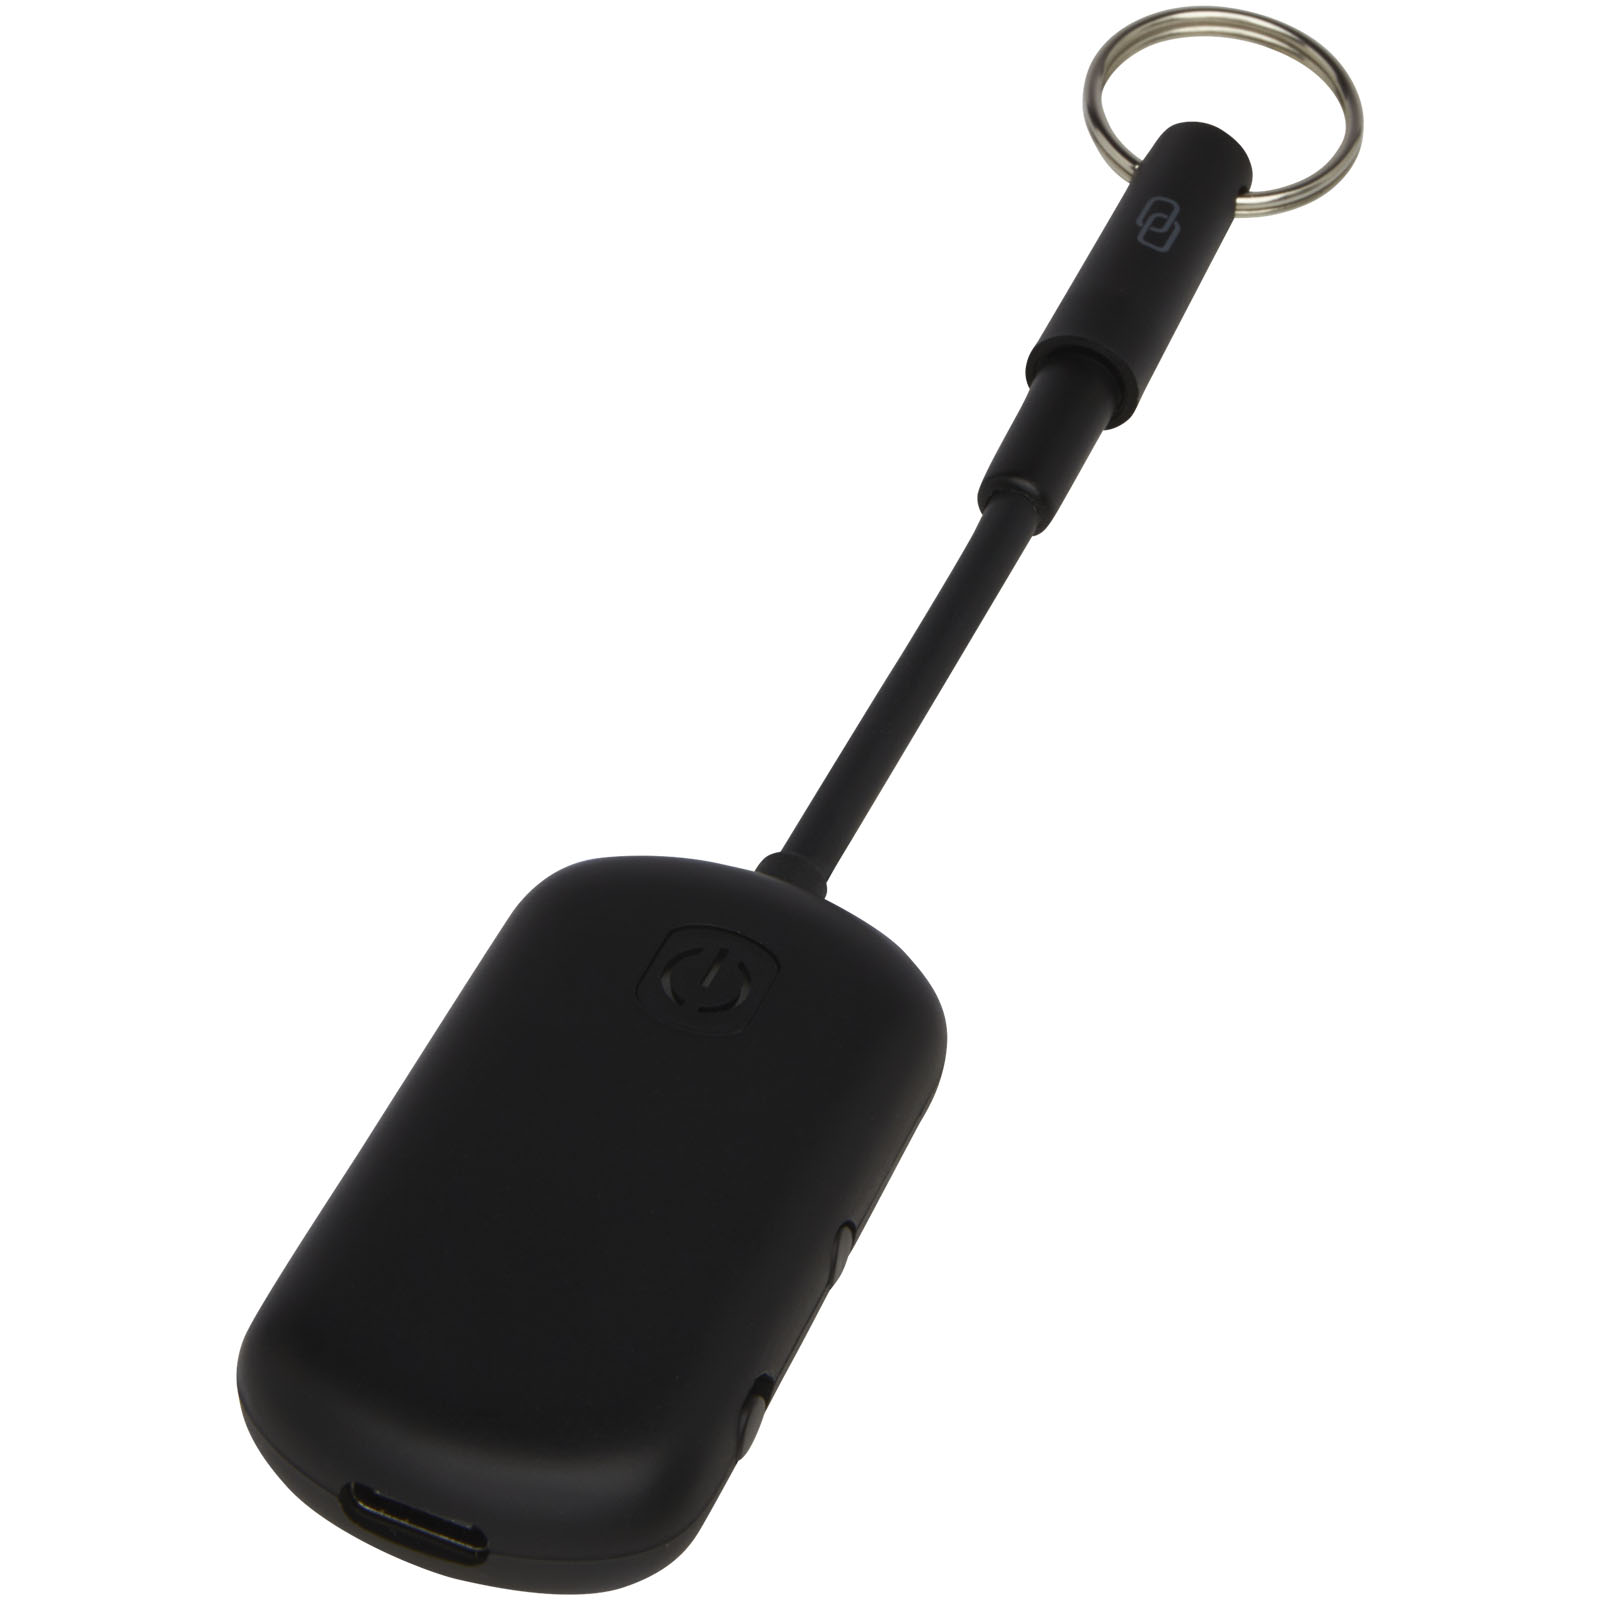 Bluetooth® audio transmitter VITORE - solid black